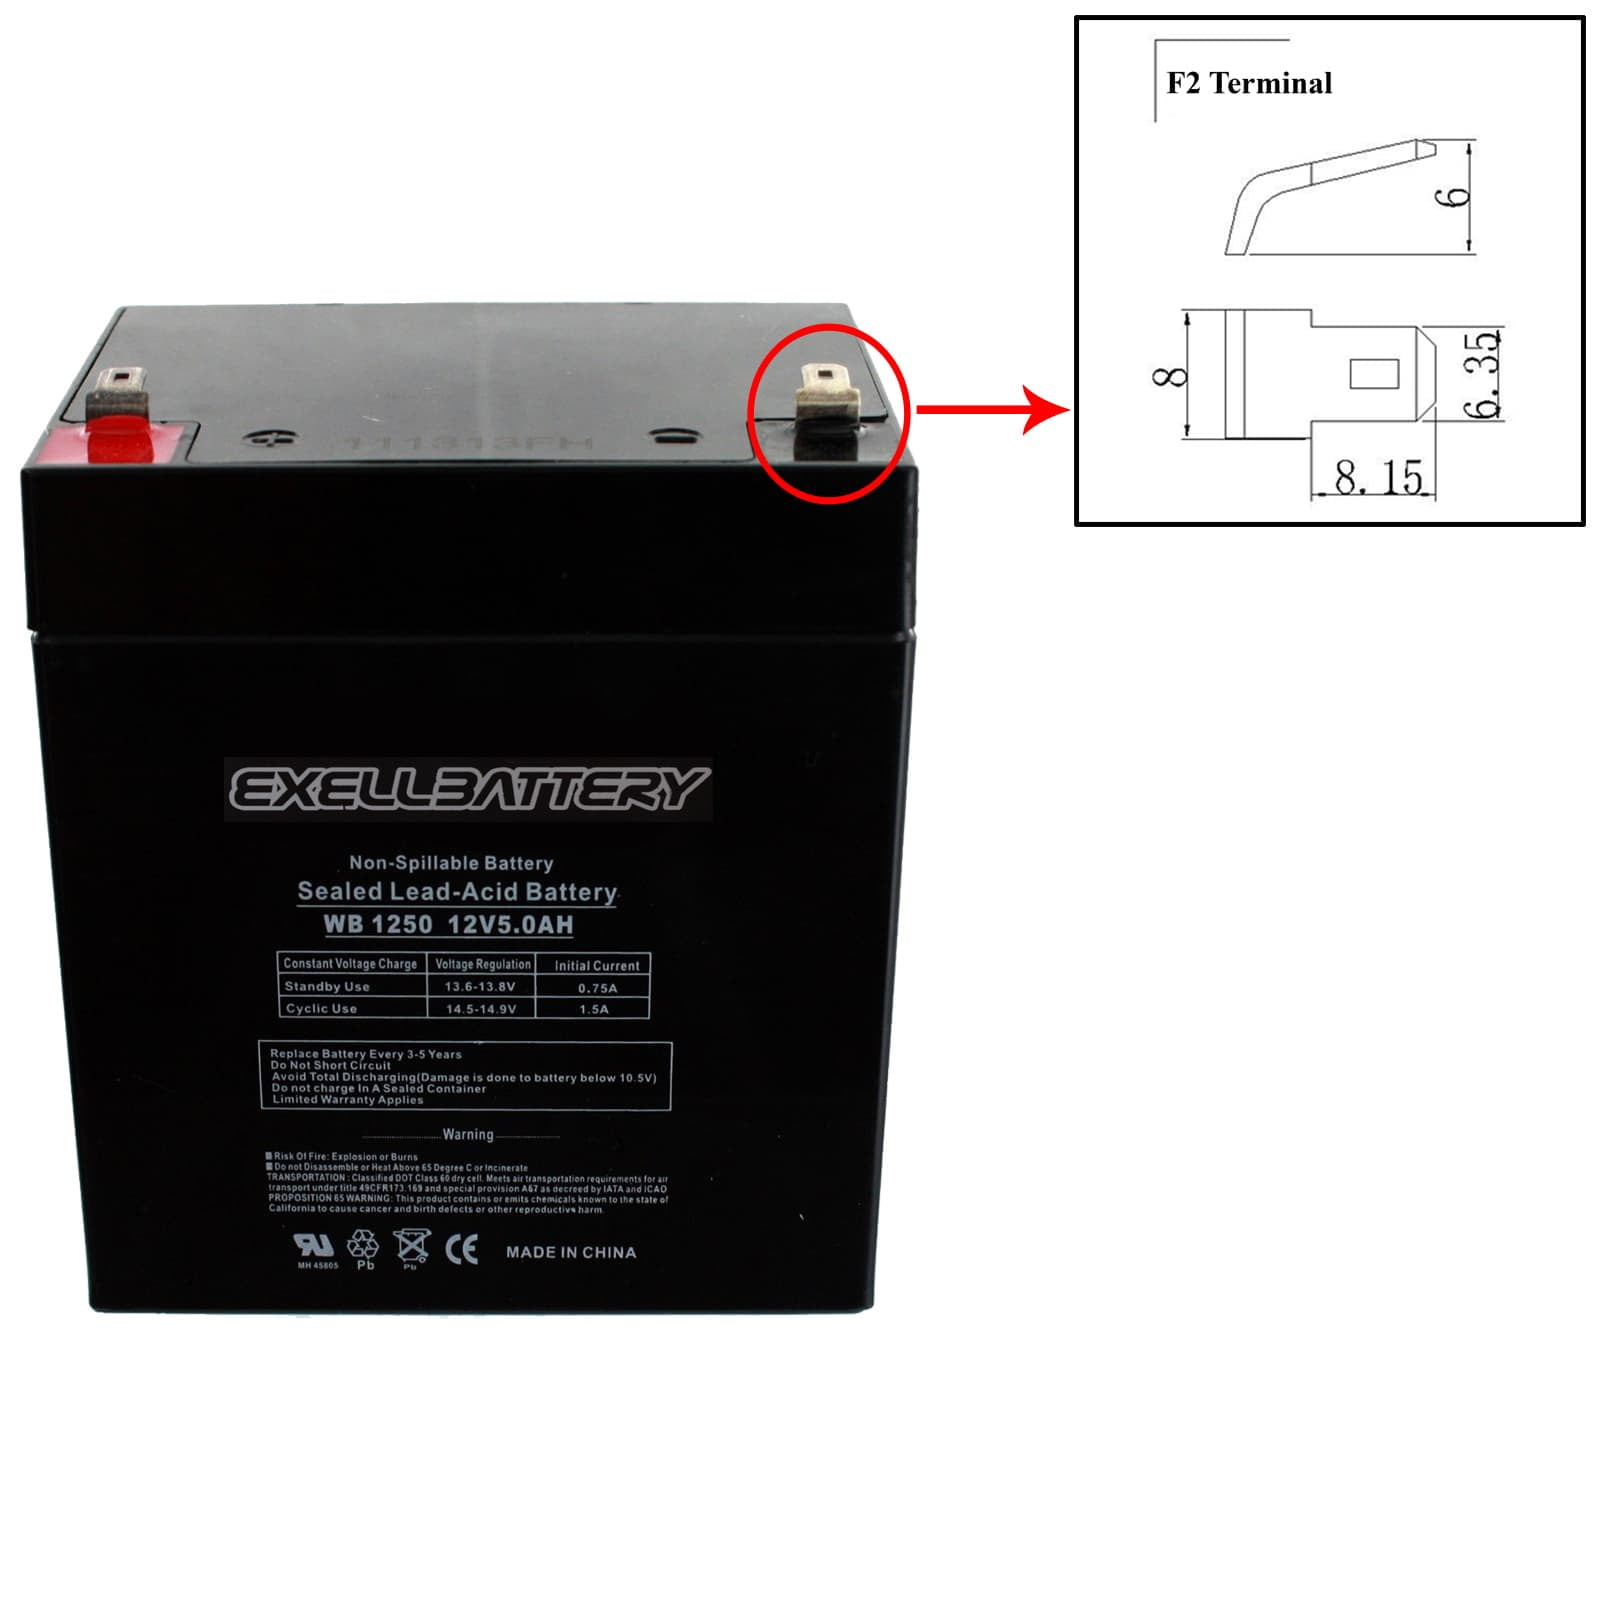 Replace battery перевод. Ub1250. Аккумуляторная батарея WB-2200. Аккумулятор dhb1250. VSVL lead acid Battery.